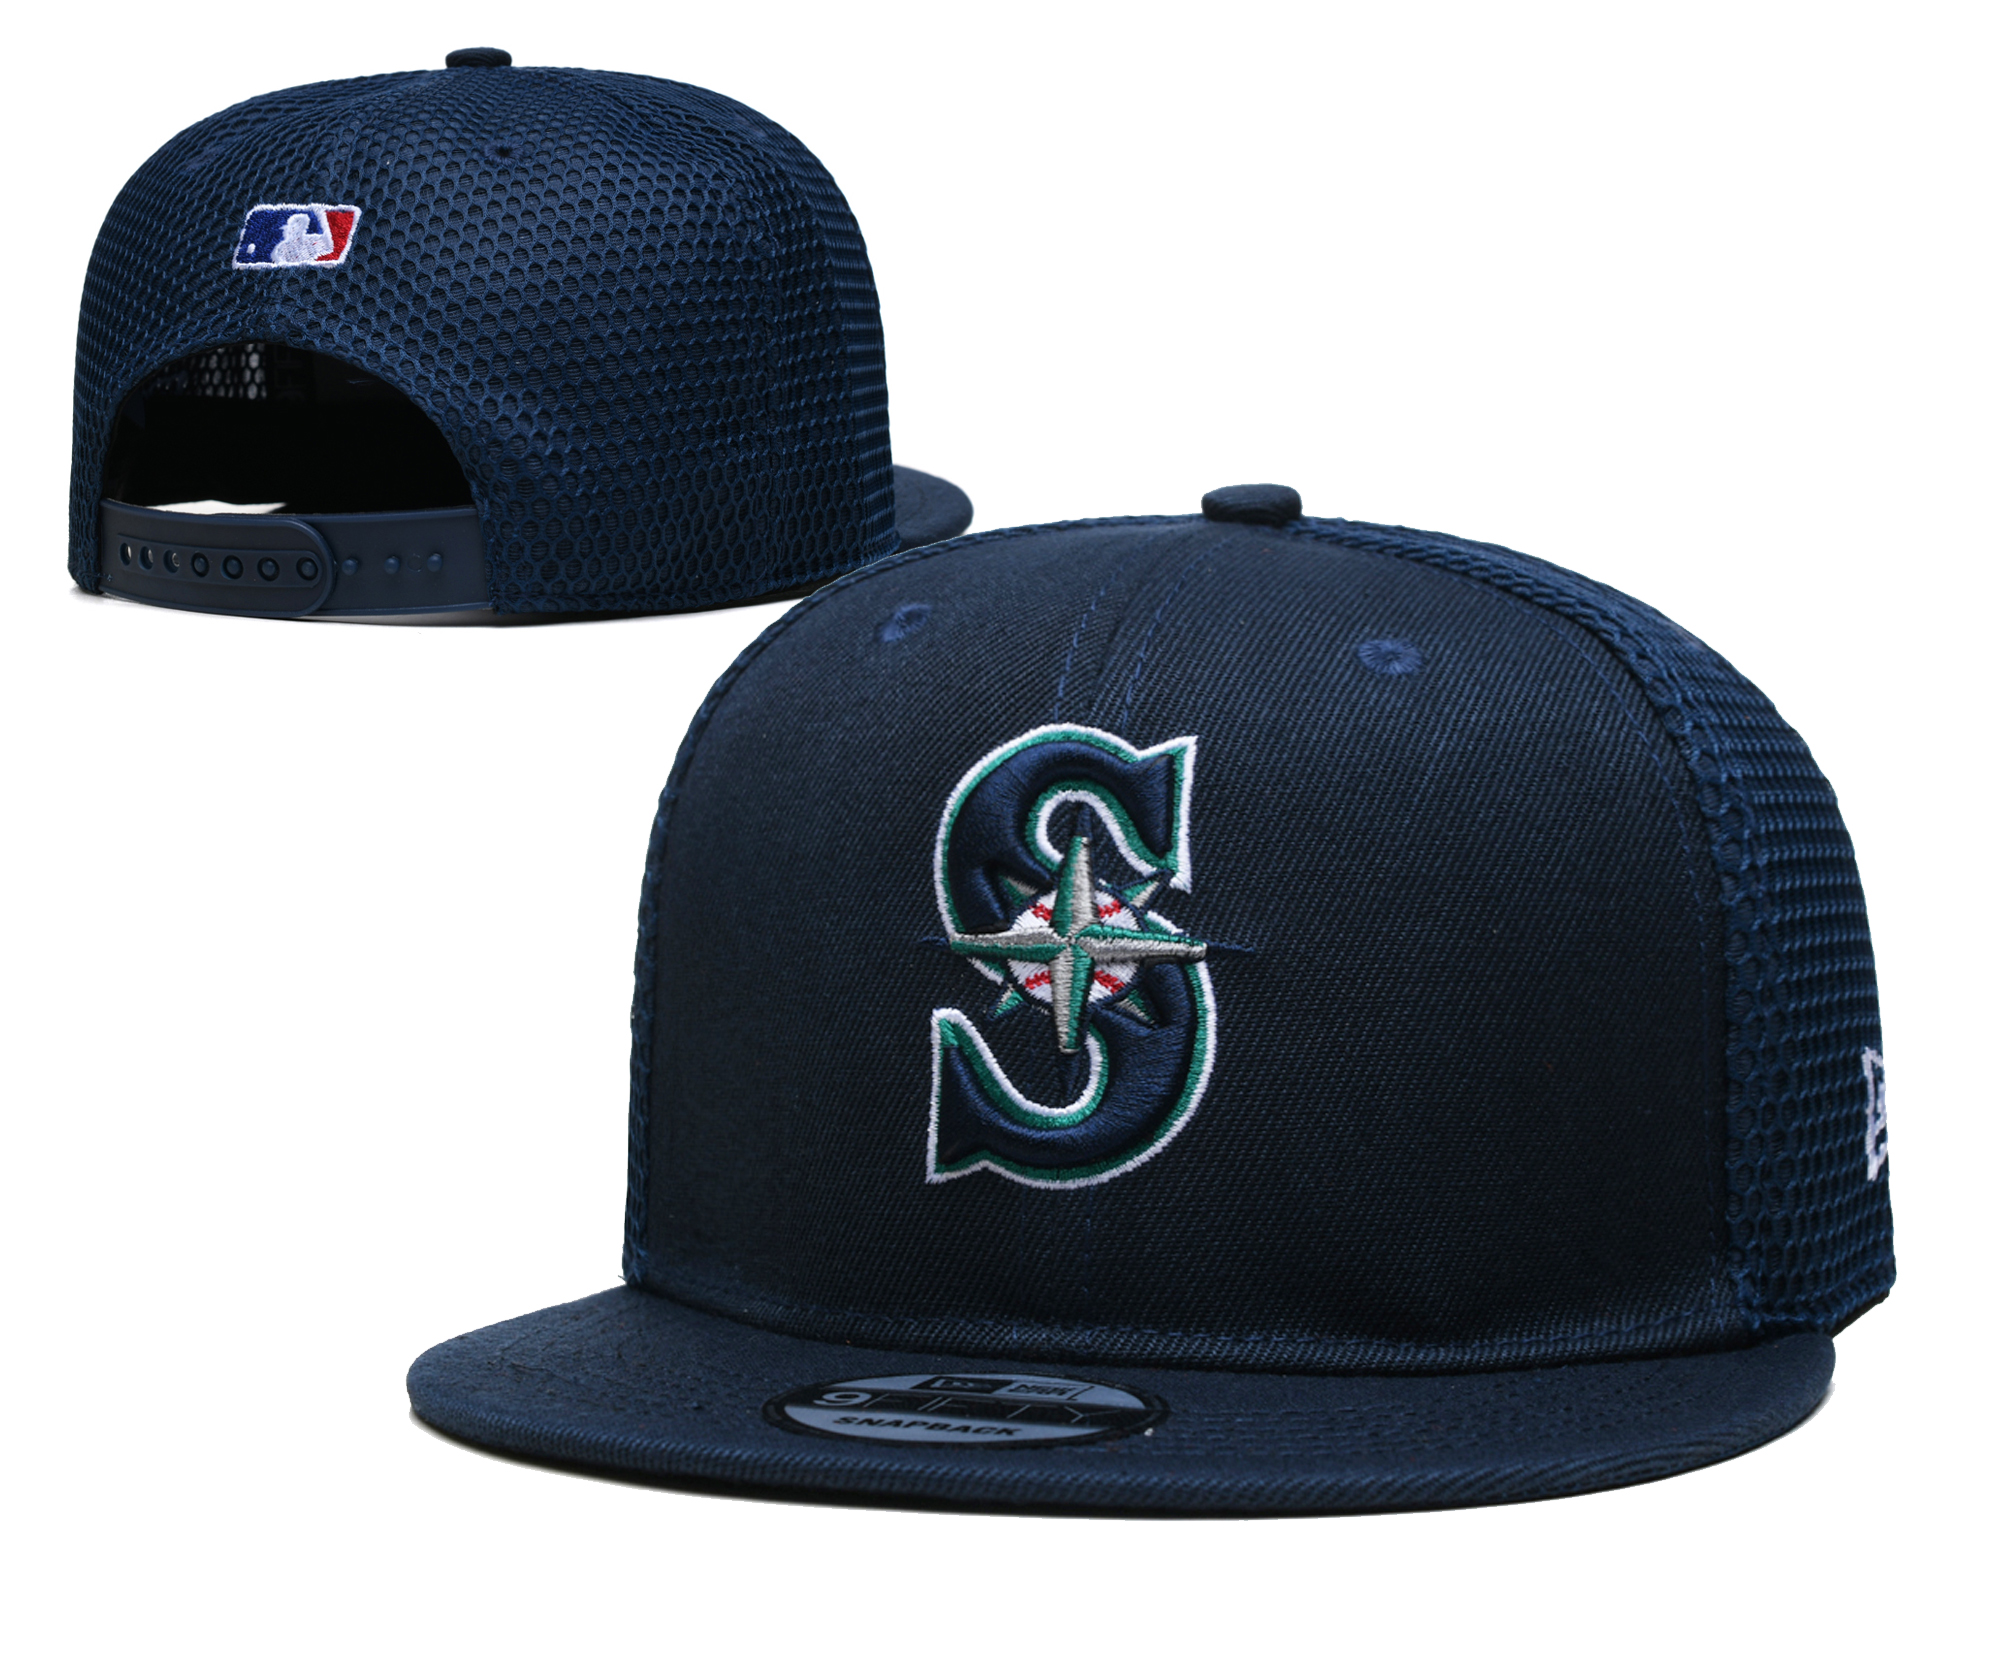 Cheap 2021 MLB Seattle Mariners 21 TX hat